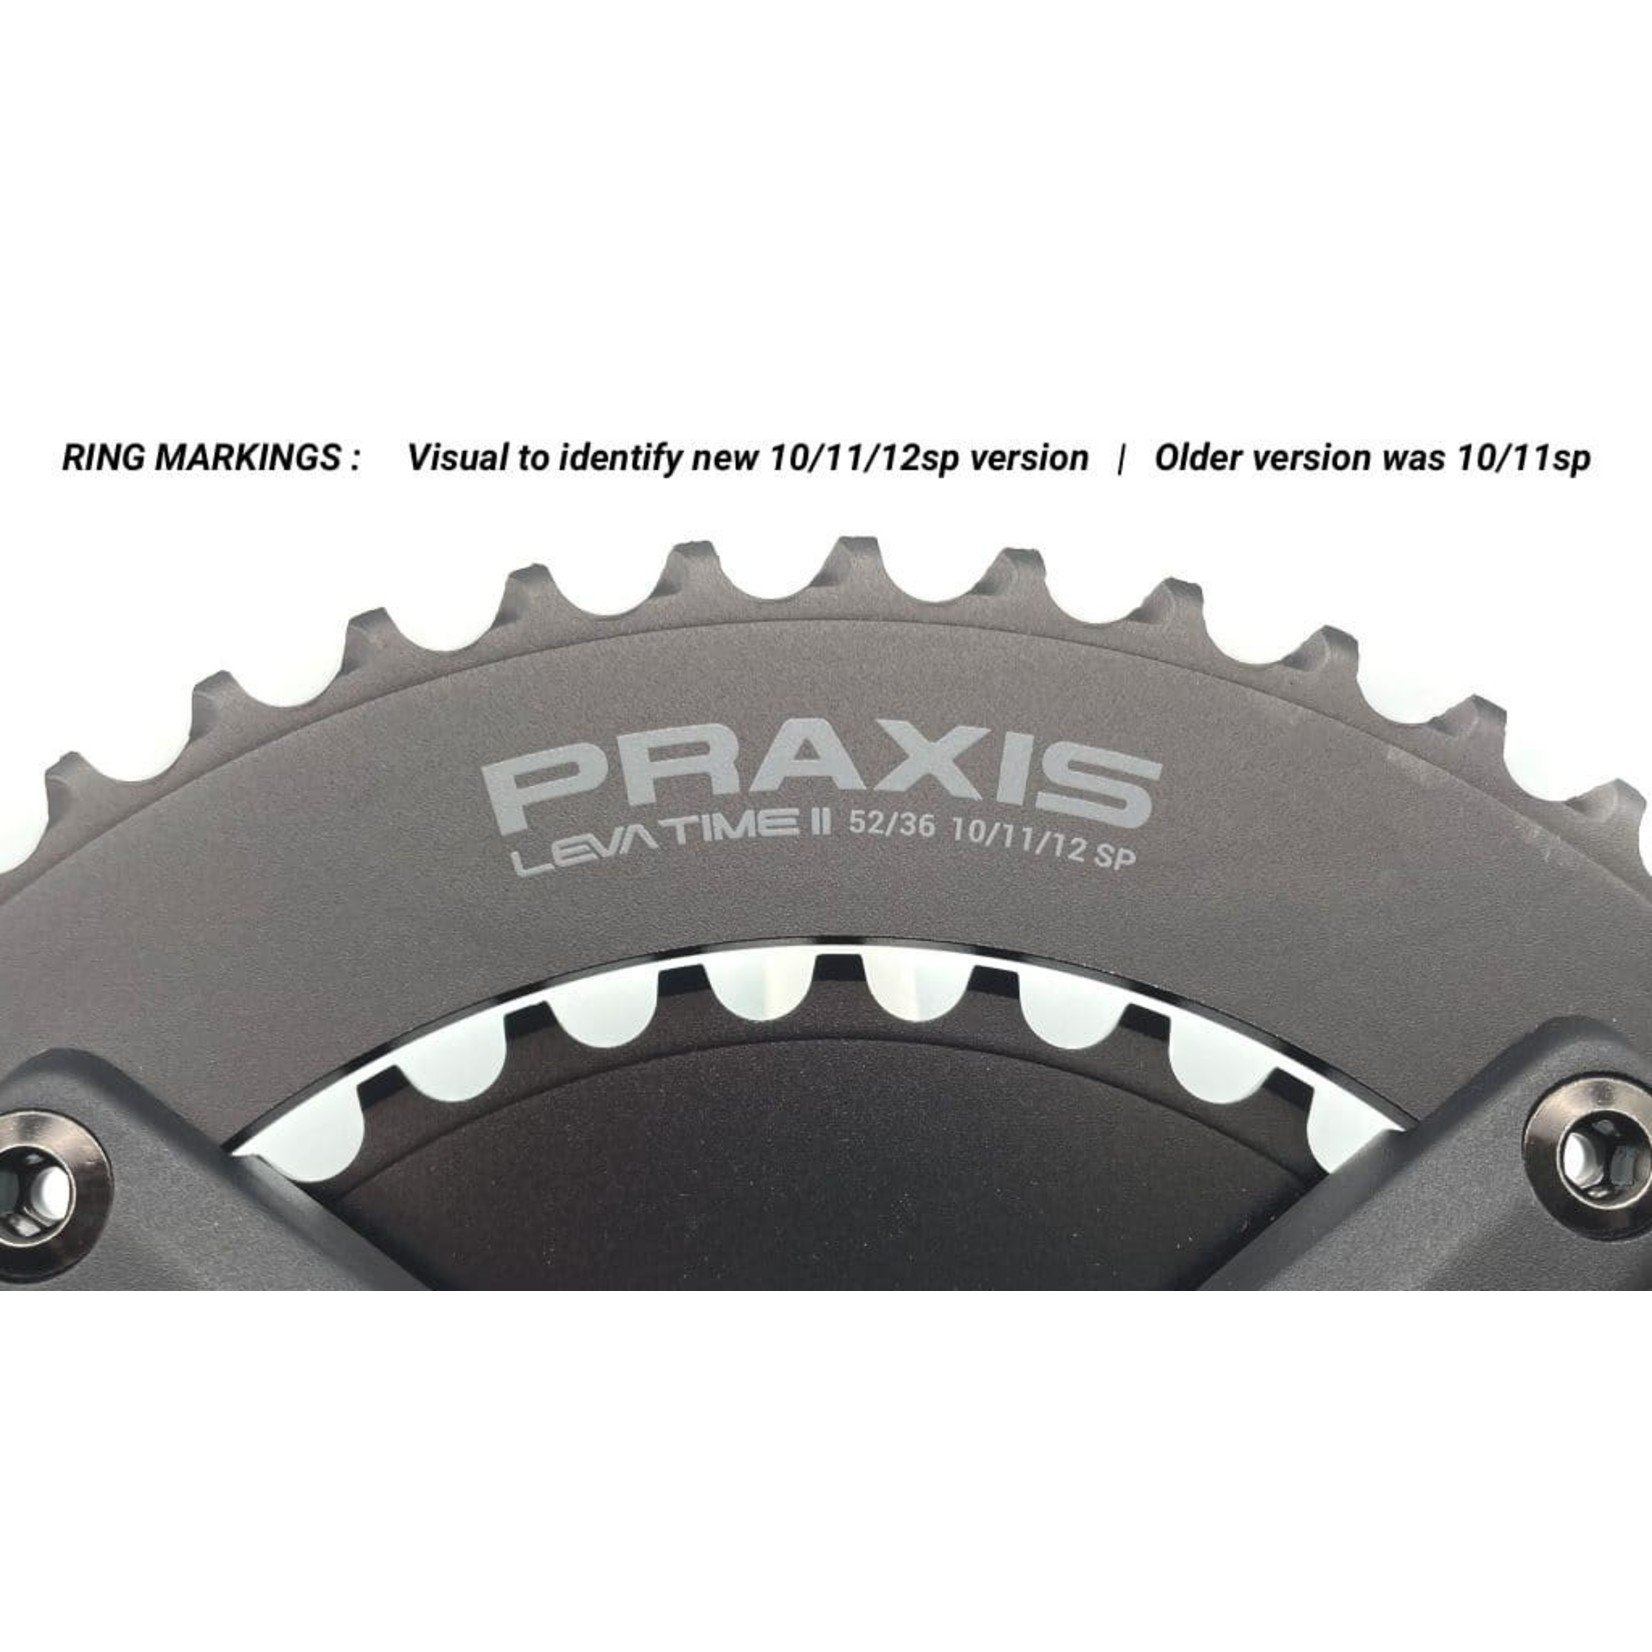 Praxis Praxis Road cranks - Zayante - Carbon-S,170mm 50/34